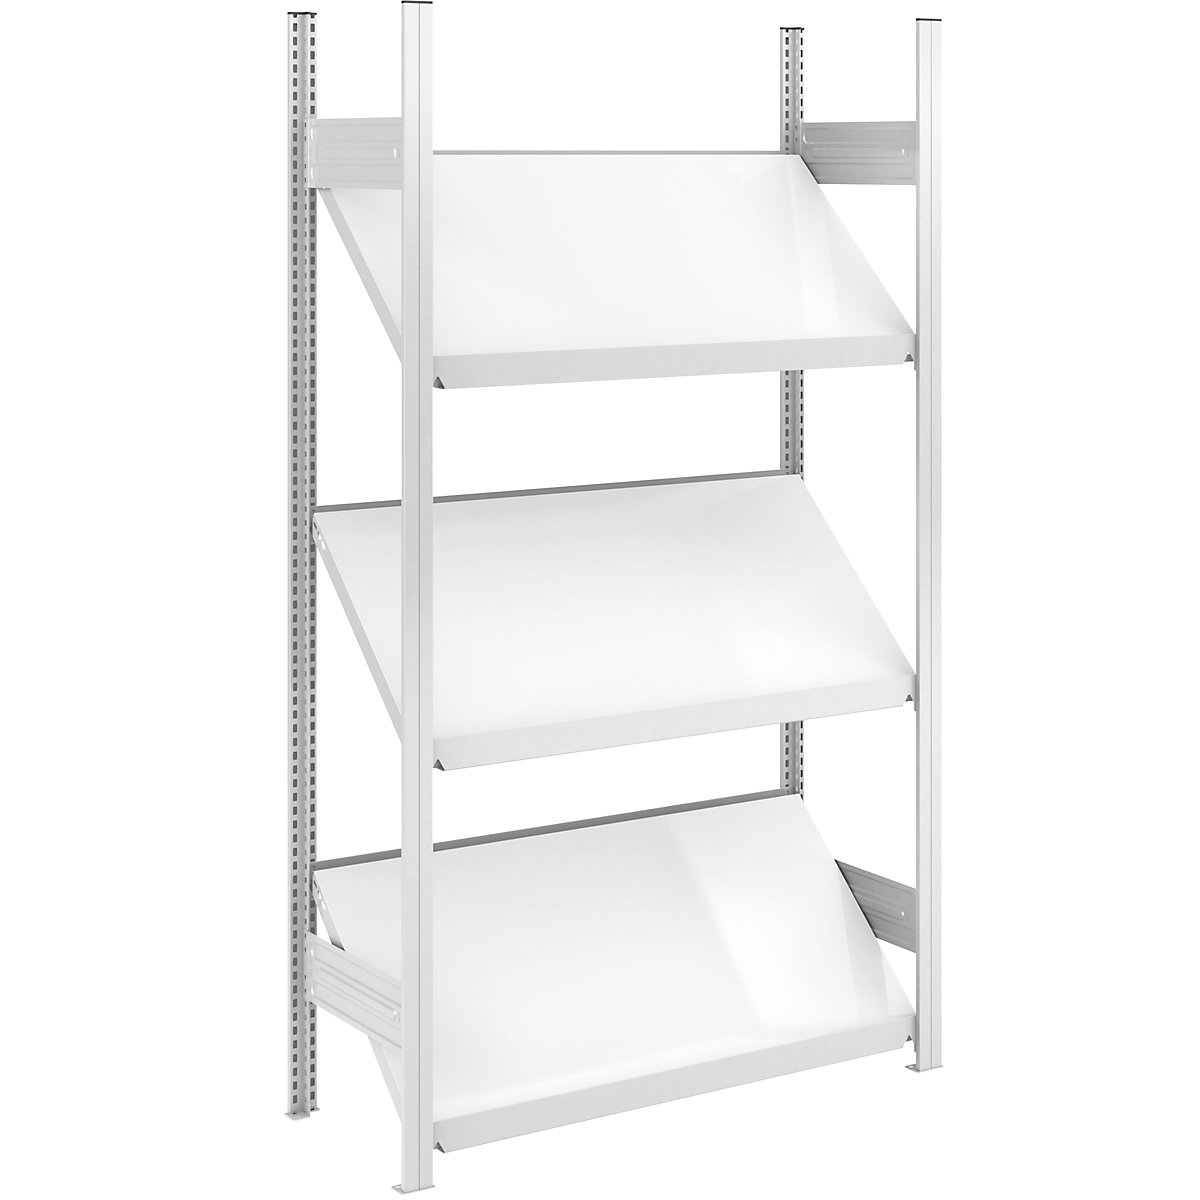 Slanted shelf unit – hofe, shelf unit height 2000 mm, shelf width 1000 mm, standard shelf unit, light grey RAL 7035